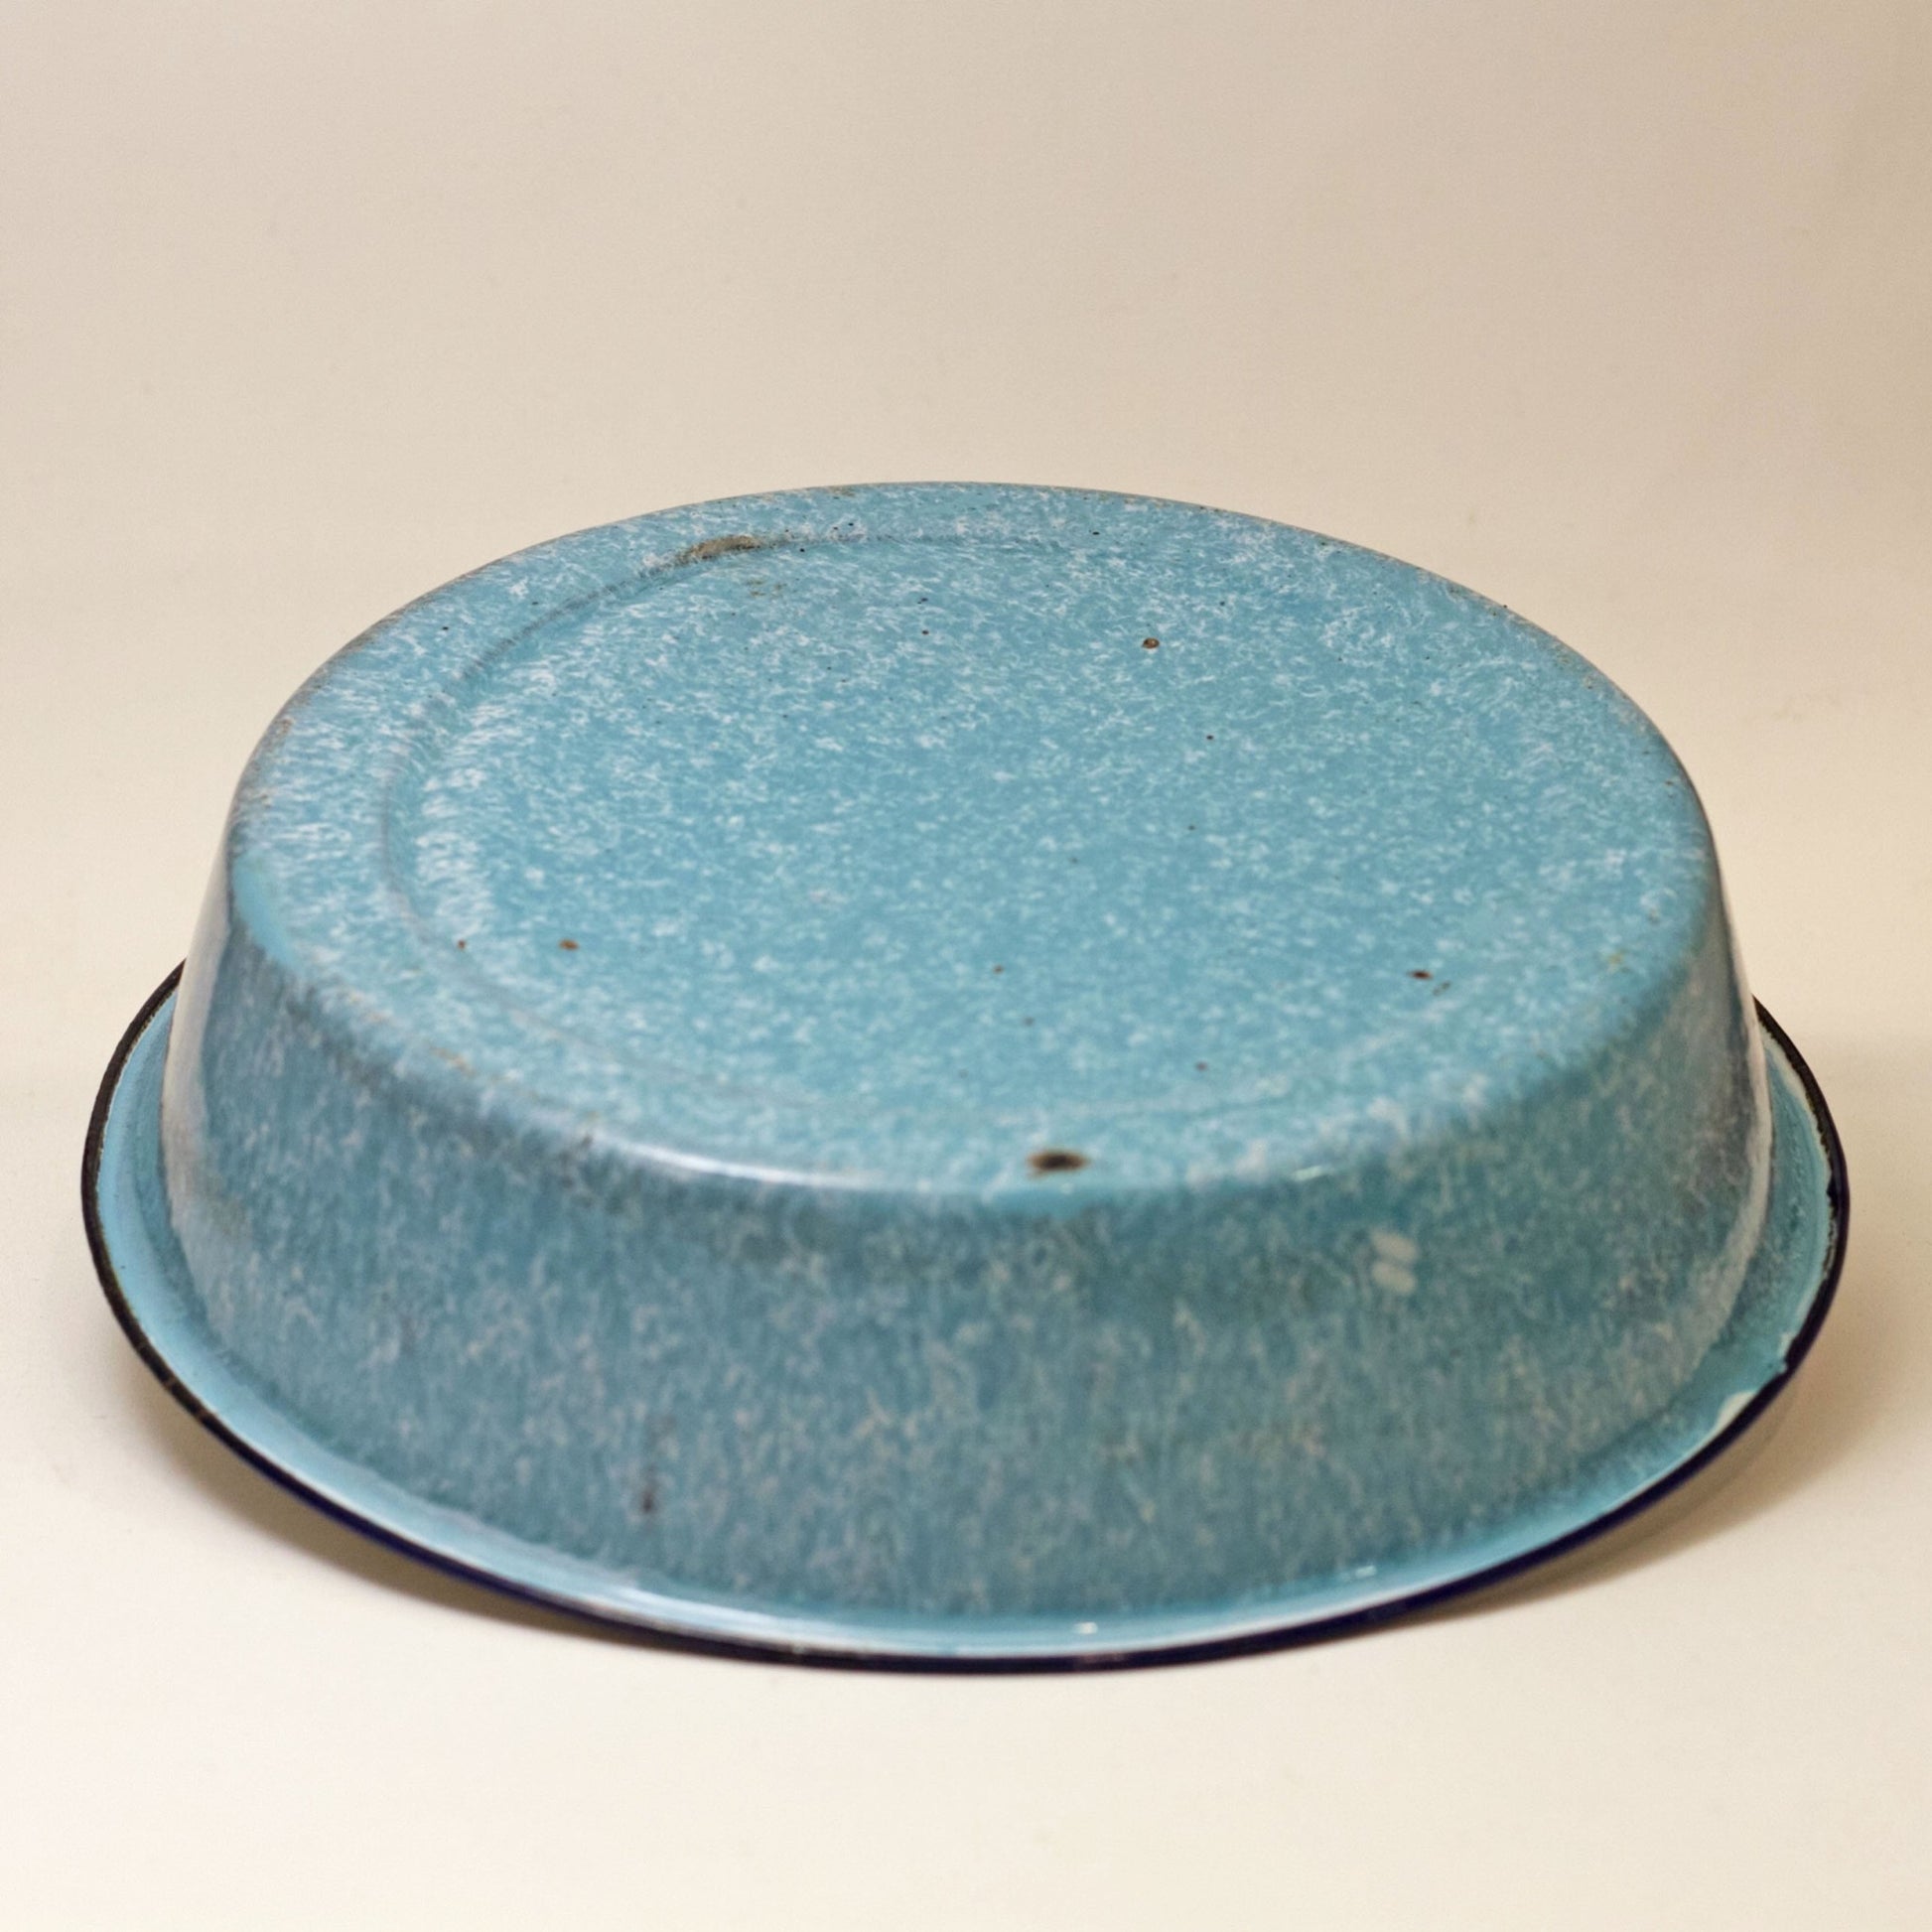 GRANITE WARE 8-INCH ROUND CAKE PAN Light Blue Gray Mottled with White Interior